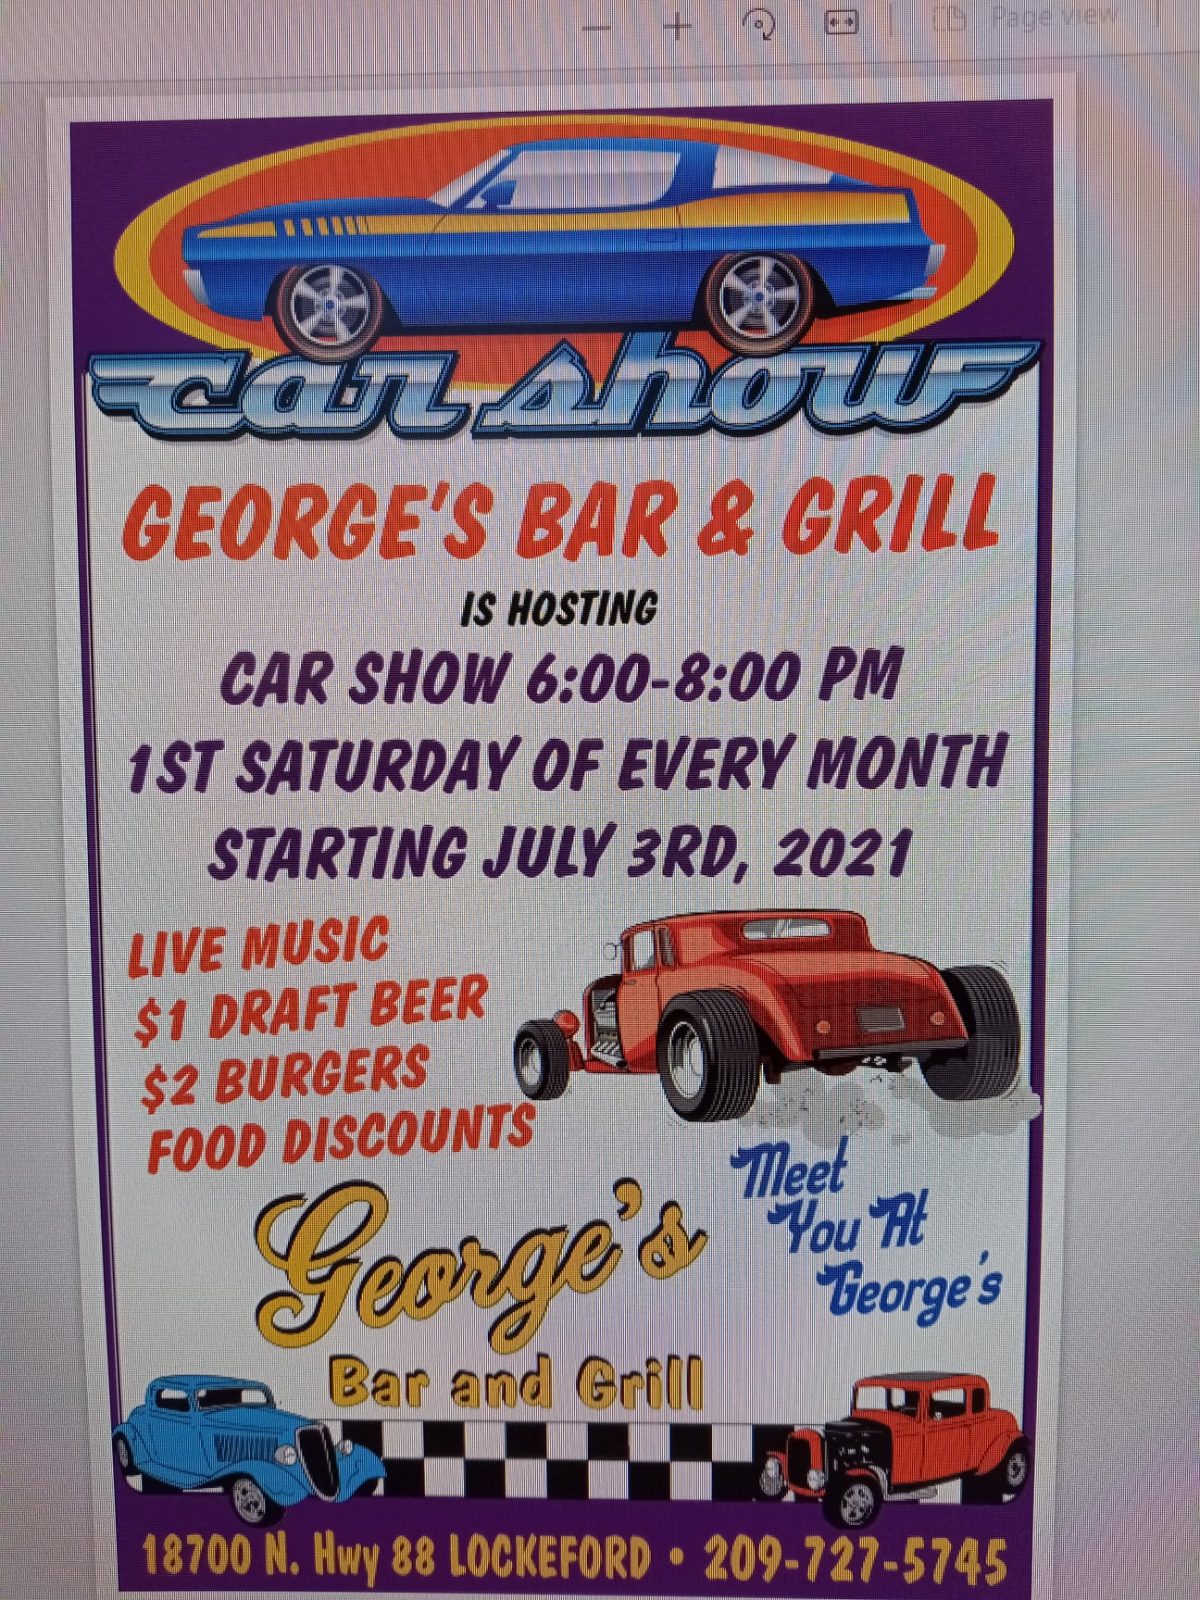 George’s Bar & Grill Car Show